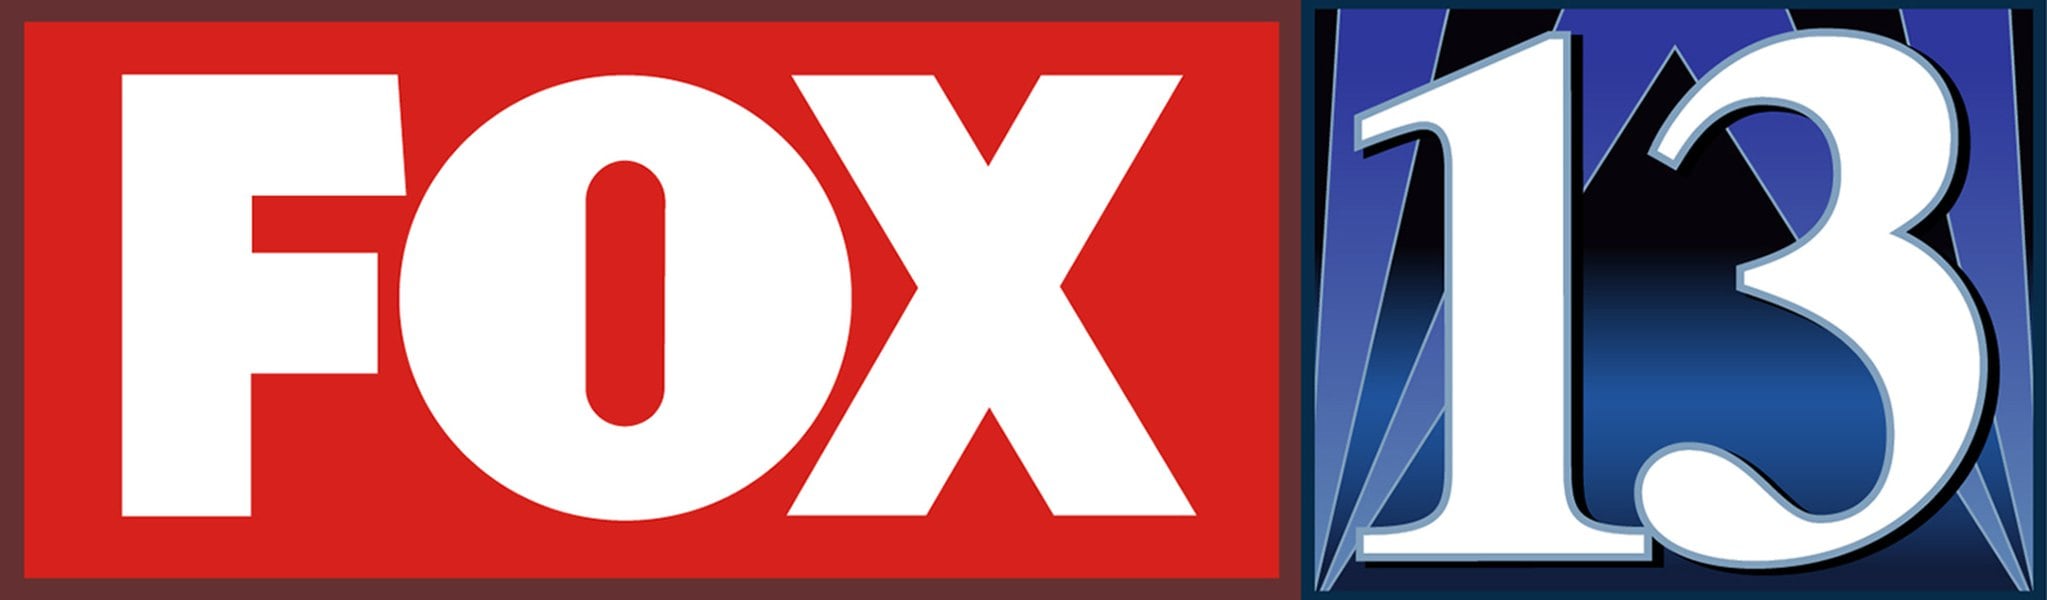 Fox 13. 13 Логотип. Логотип KSTU. Fox Broadcasting Company logo. Команда 13 лого.